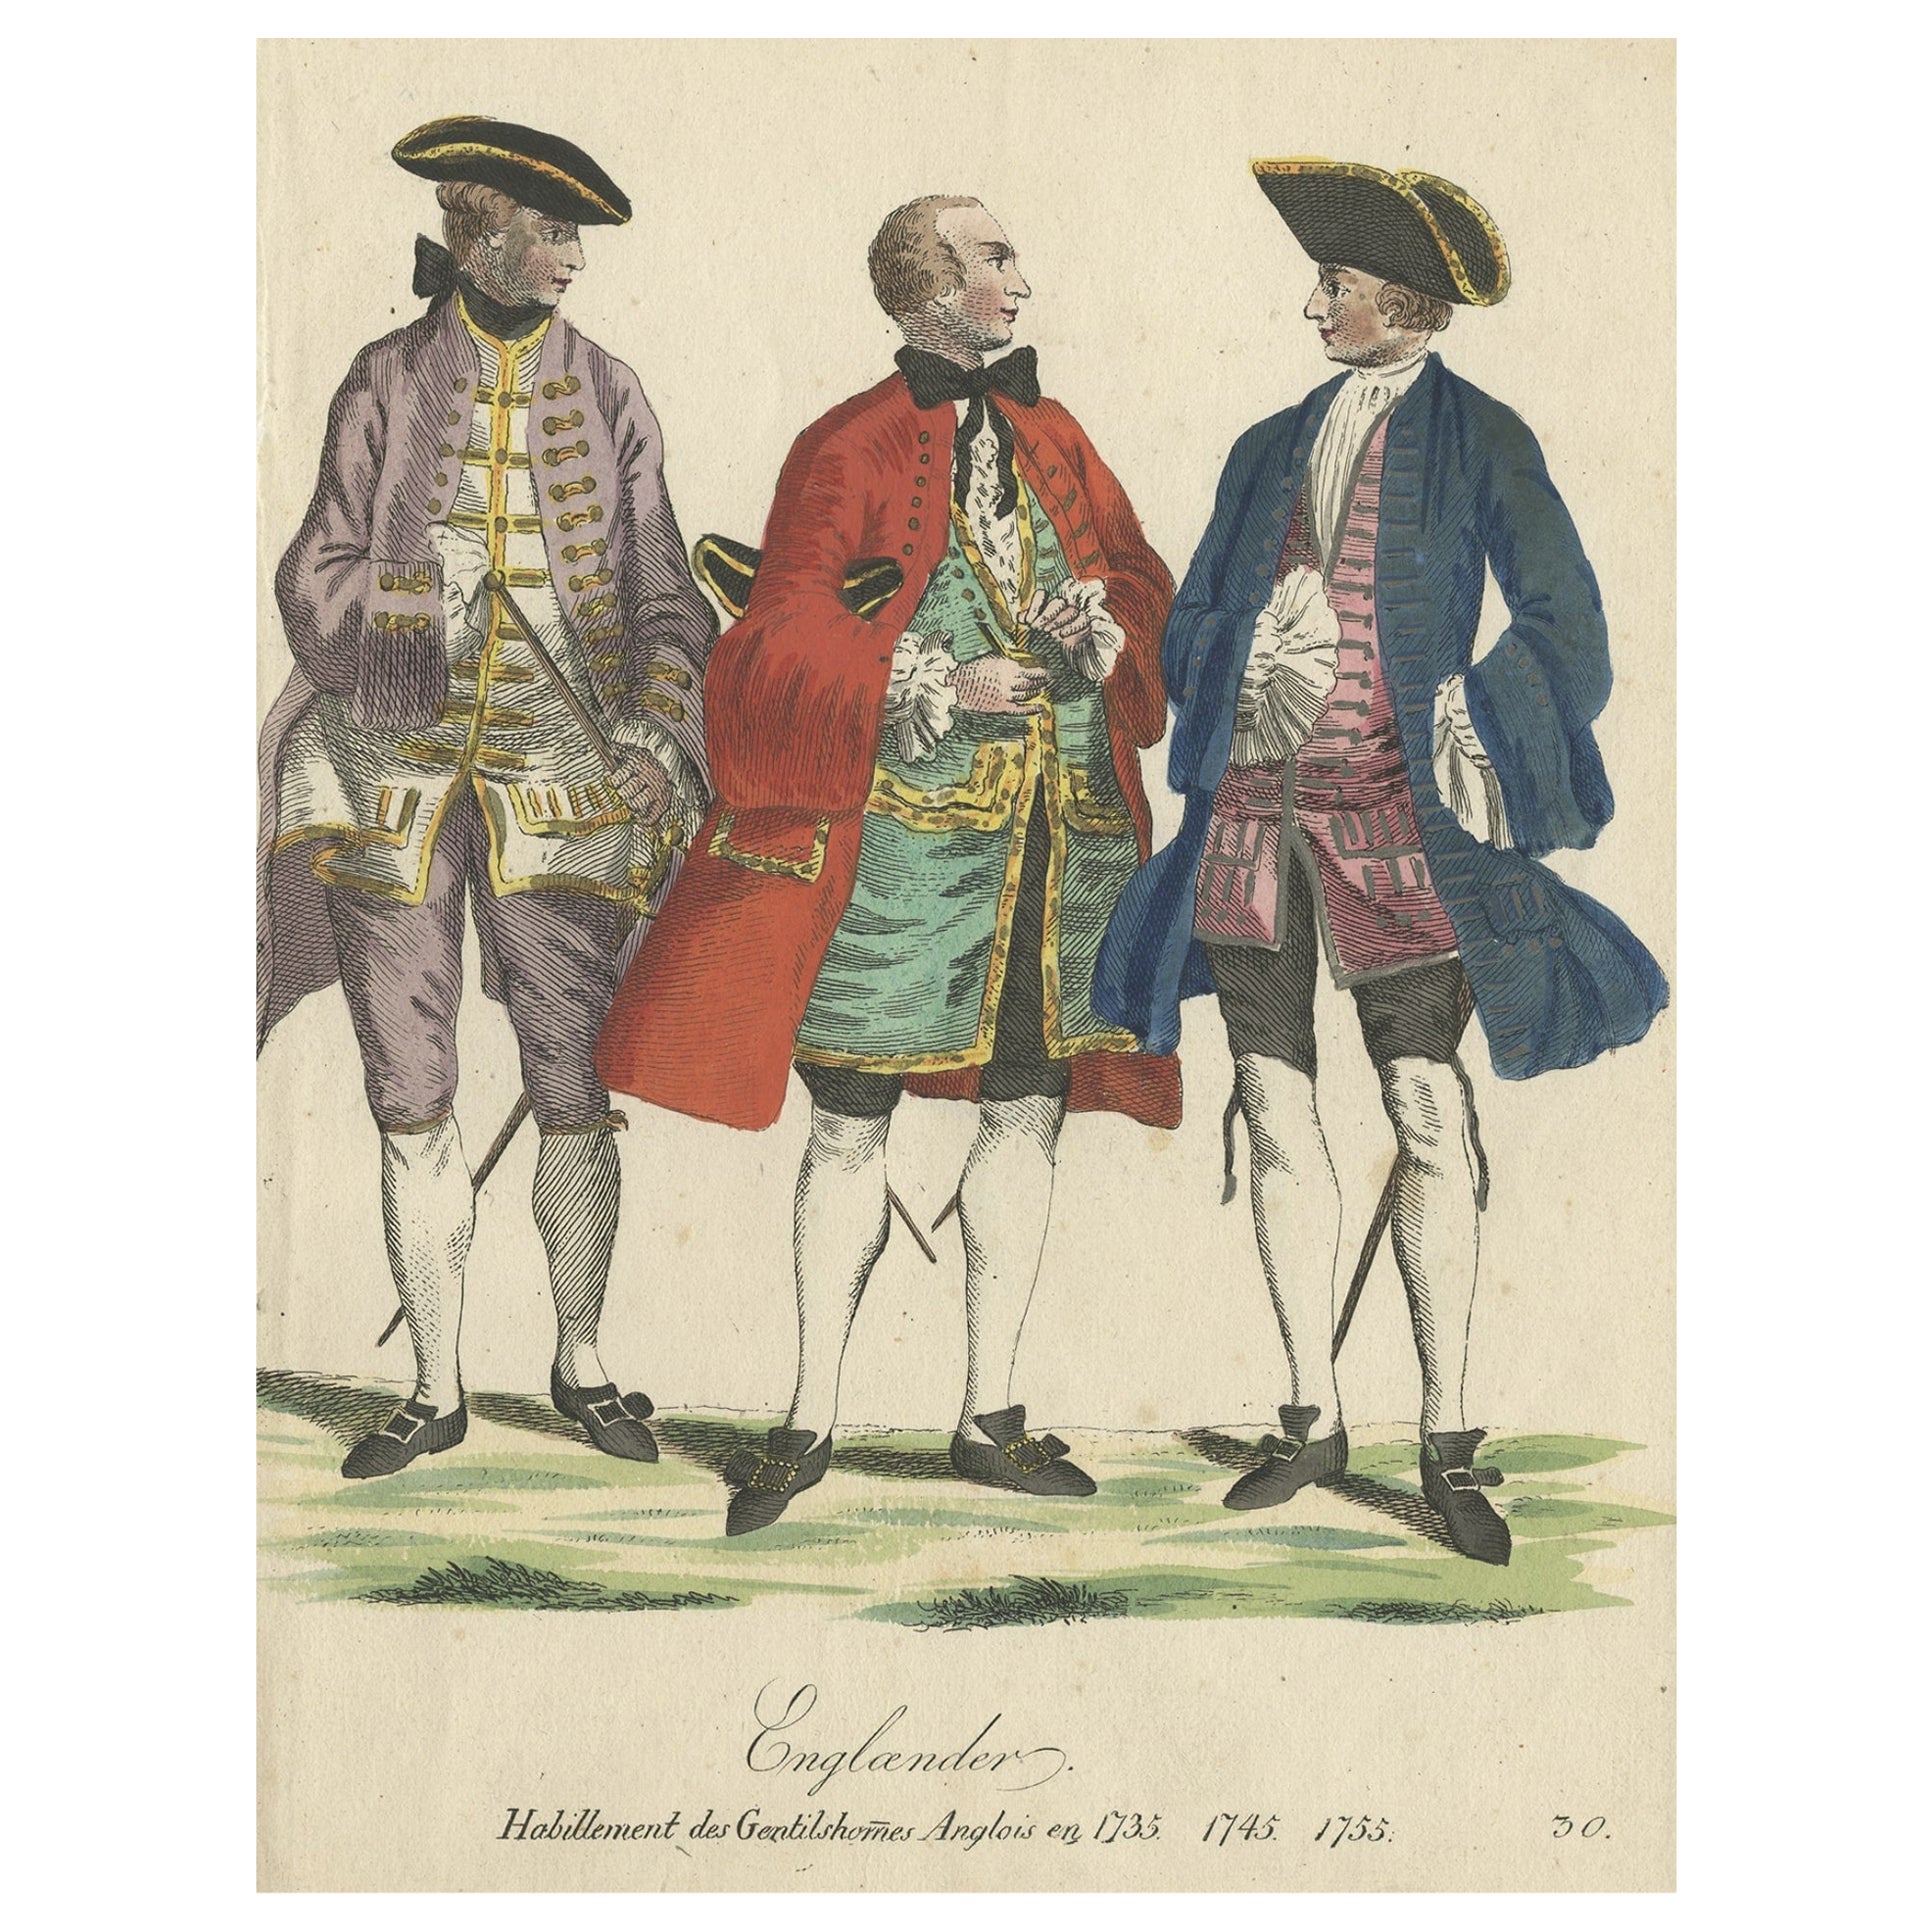 Rare Antique Costume Print Showing Three Gentlemen from England, 1805